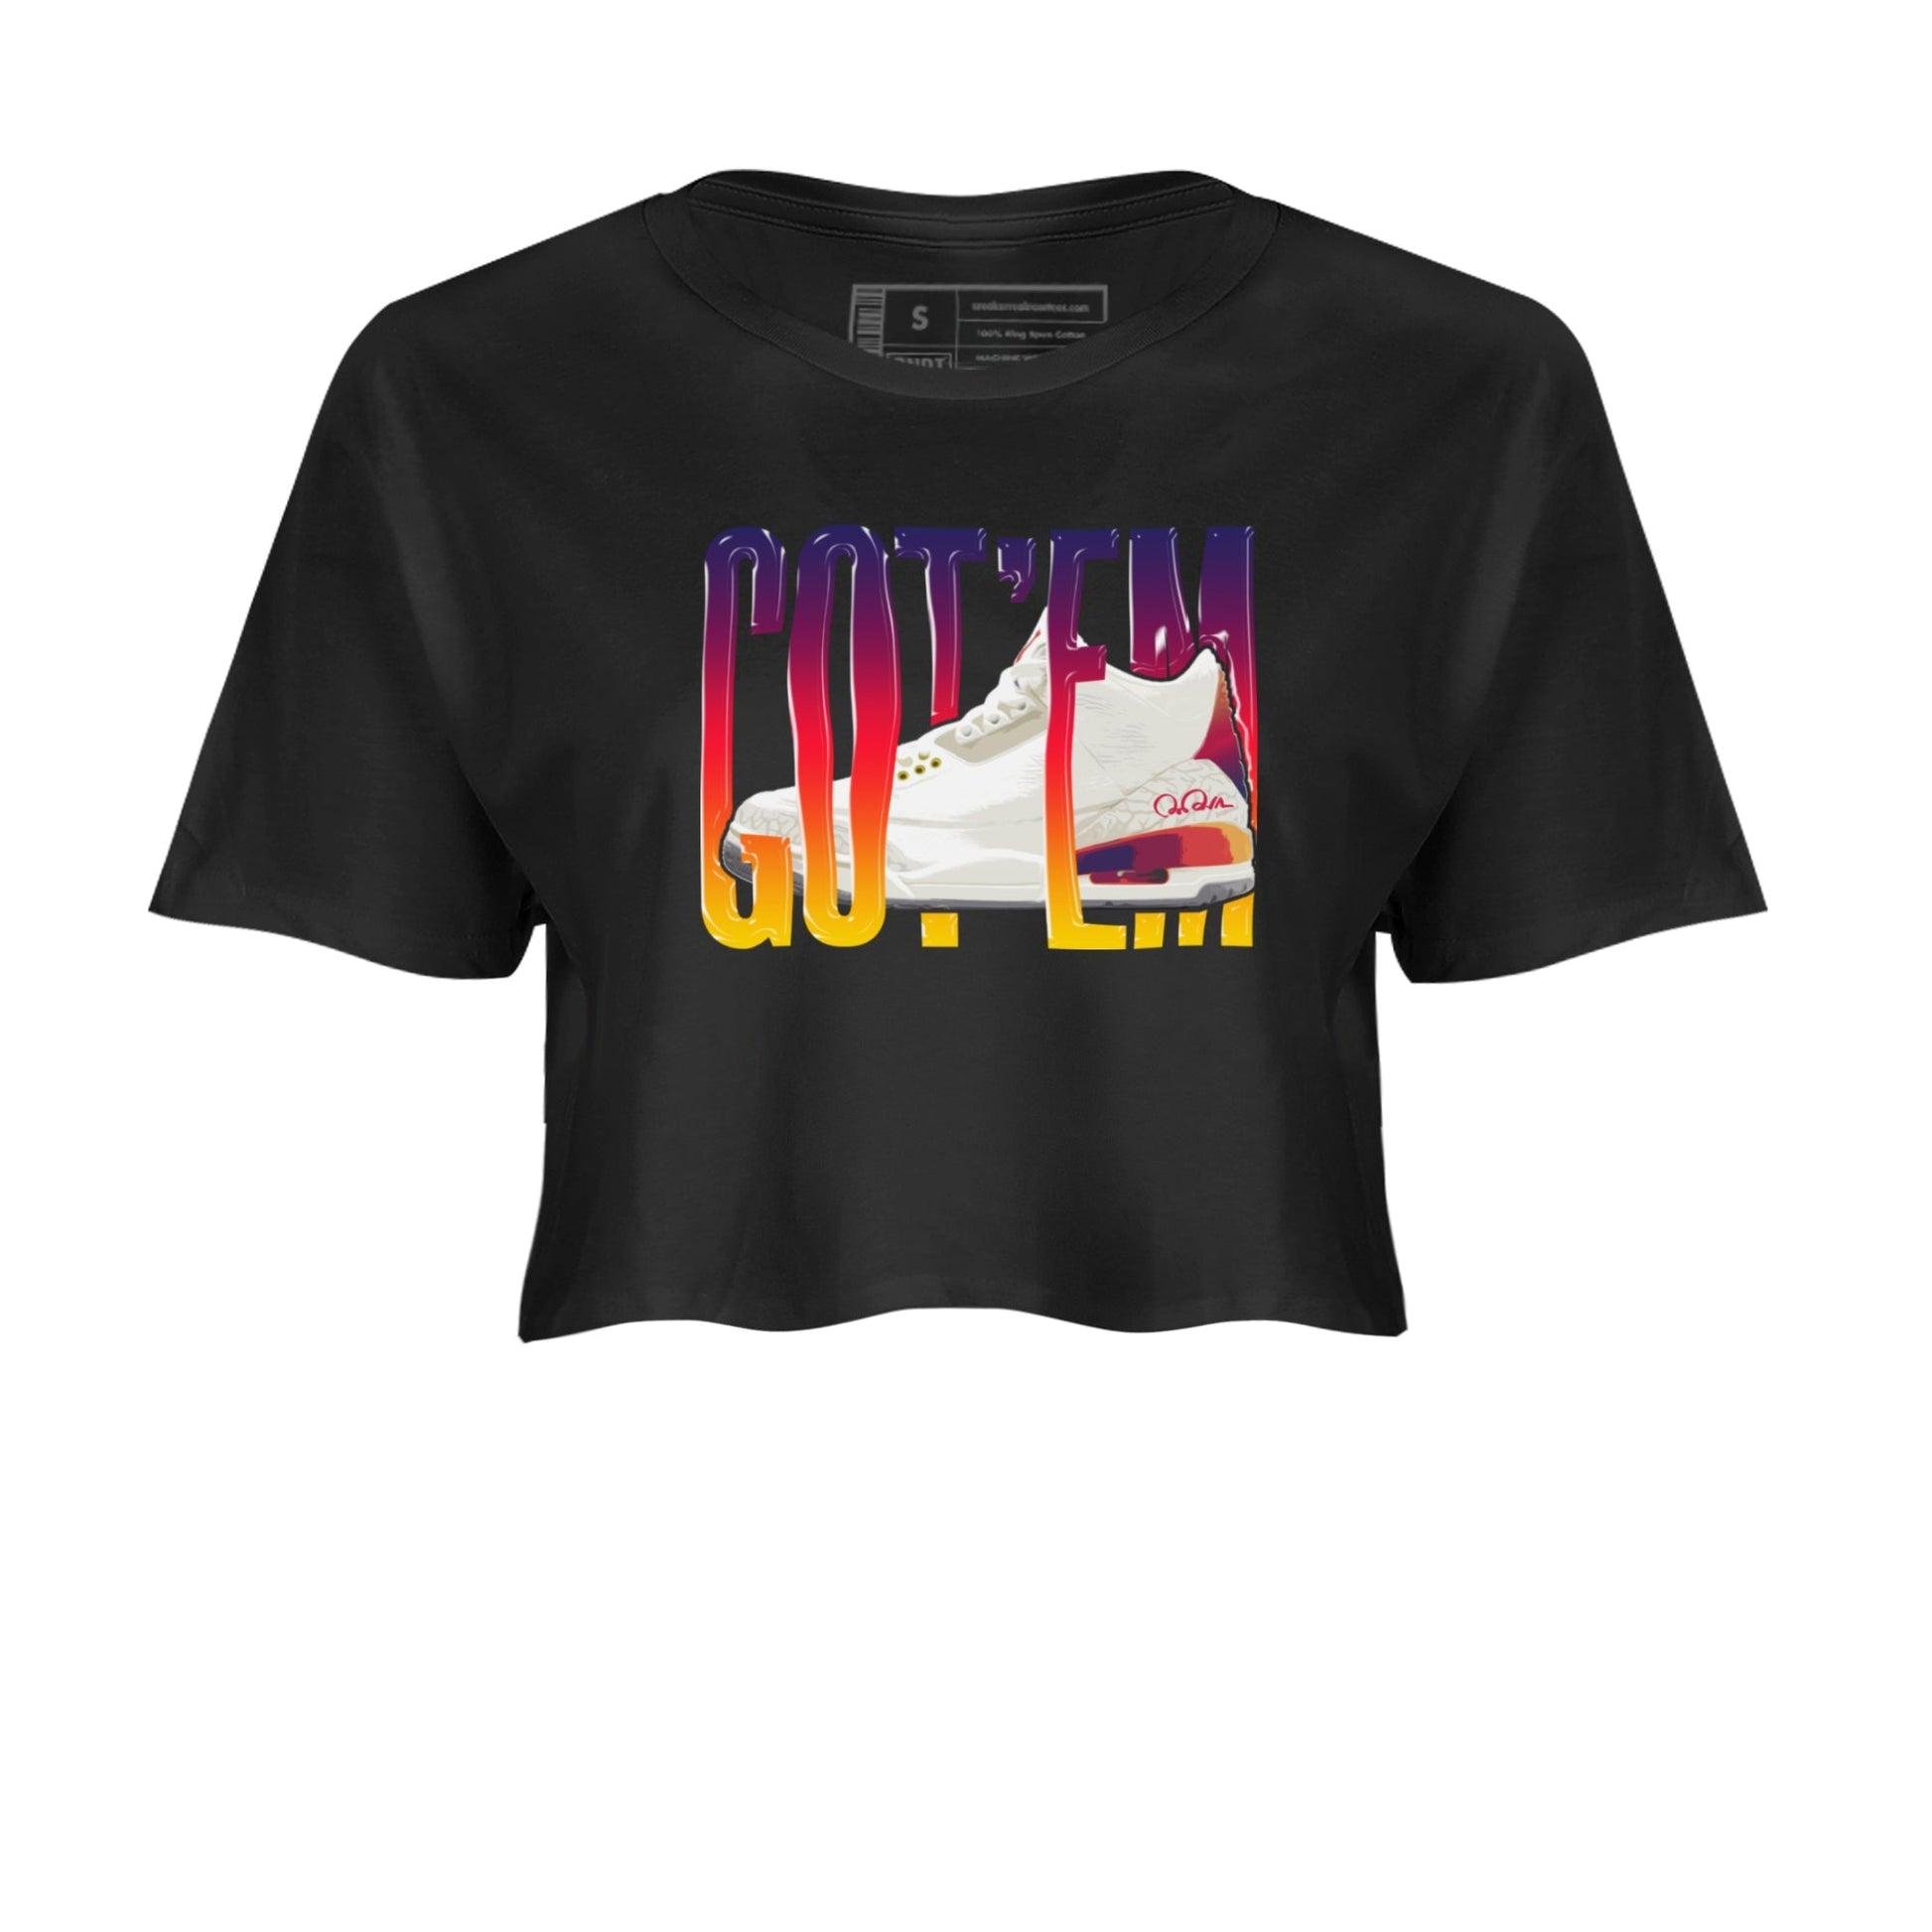 Air Jordan 3 J Balvin shirt to match jordans Wiggling Gottem Streetwear Sneaker Shirt AJ3 Balvin  Drip Gear Zone Sneaker Matching Clothing LGBTQ Gay Pride T-Shirt Black 2 Crop T-Shirt